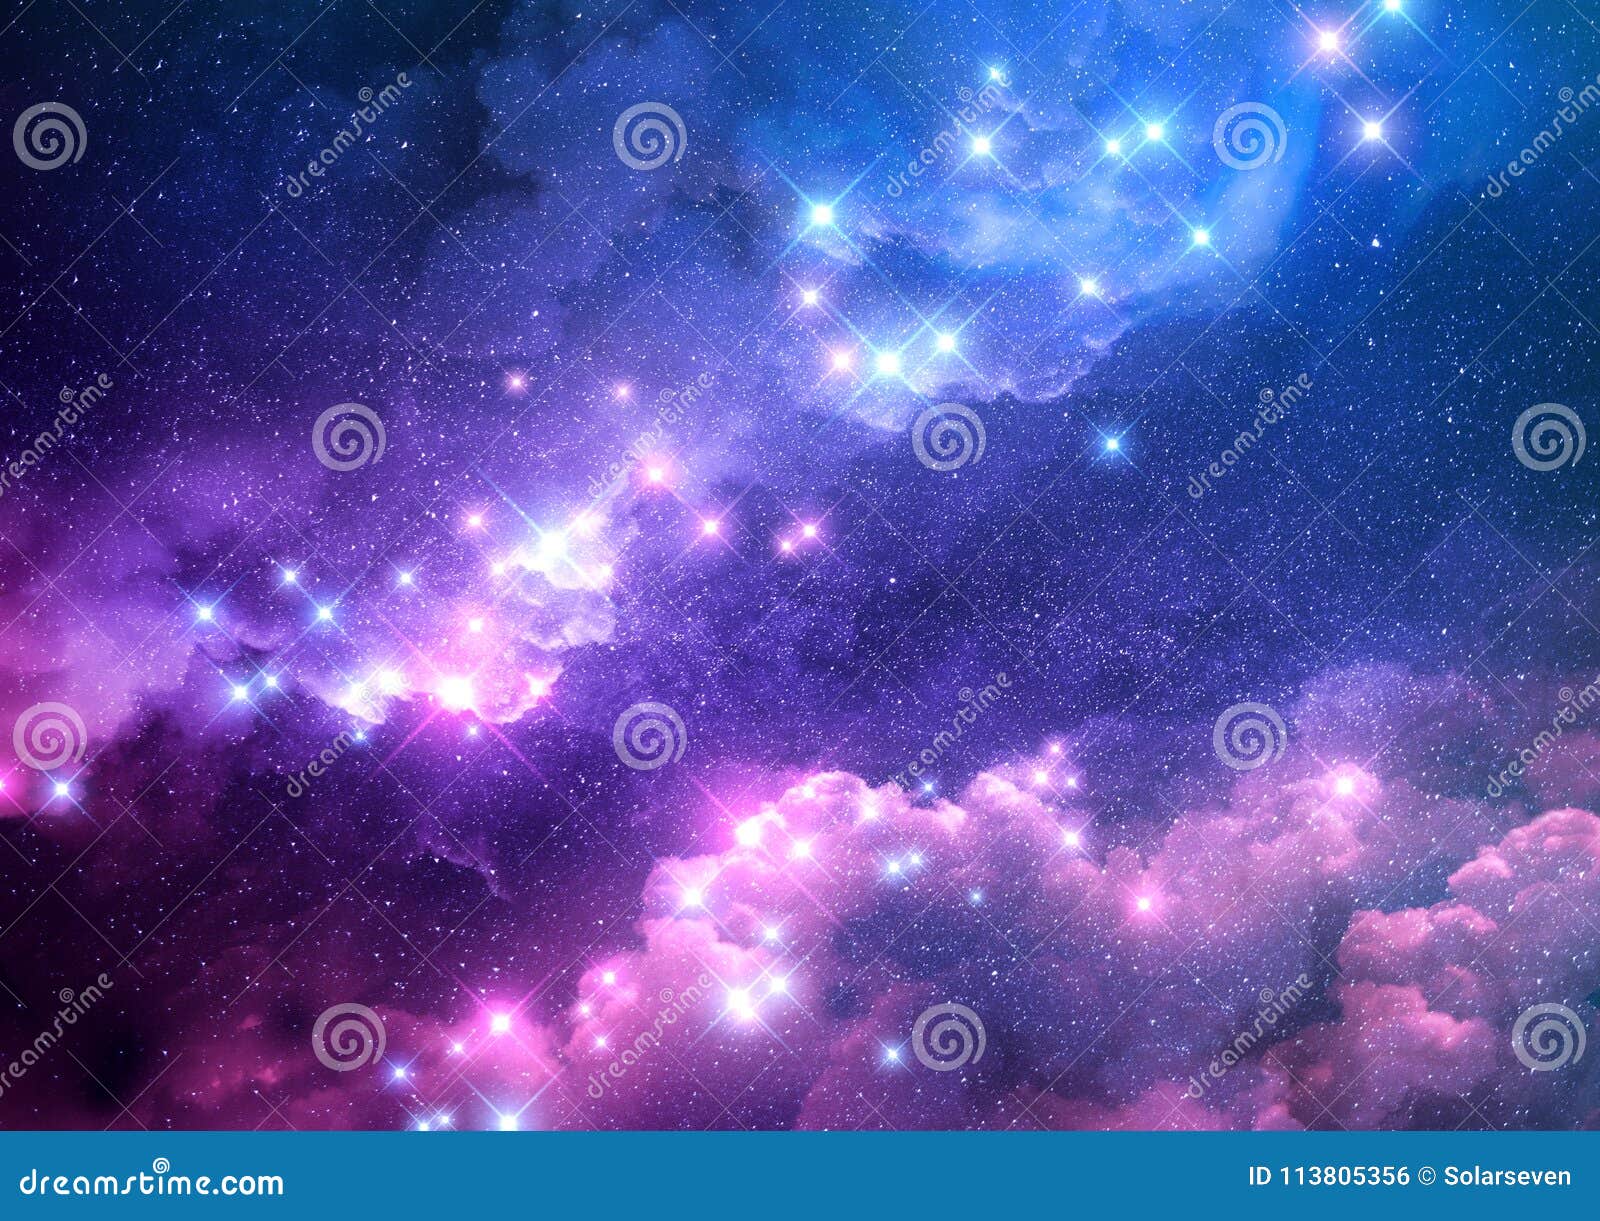 Blue Galaxy Background Stock Illustrations – 169,168 Blue Galaxy